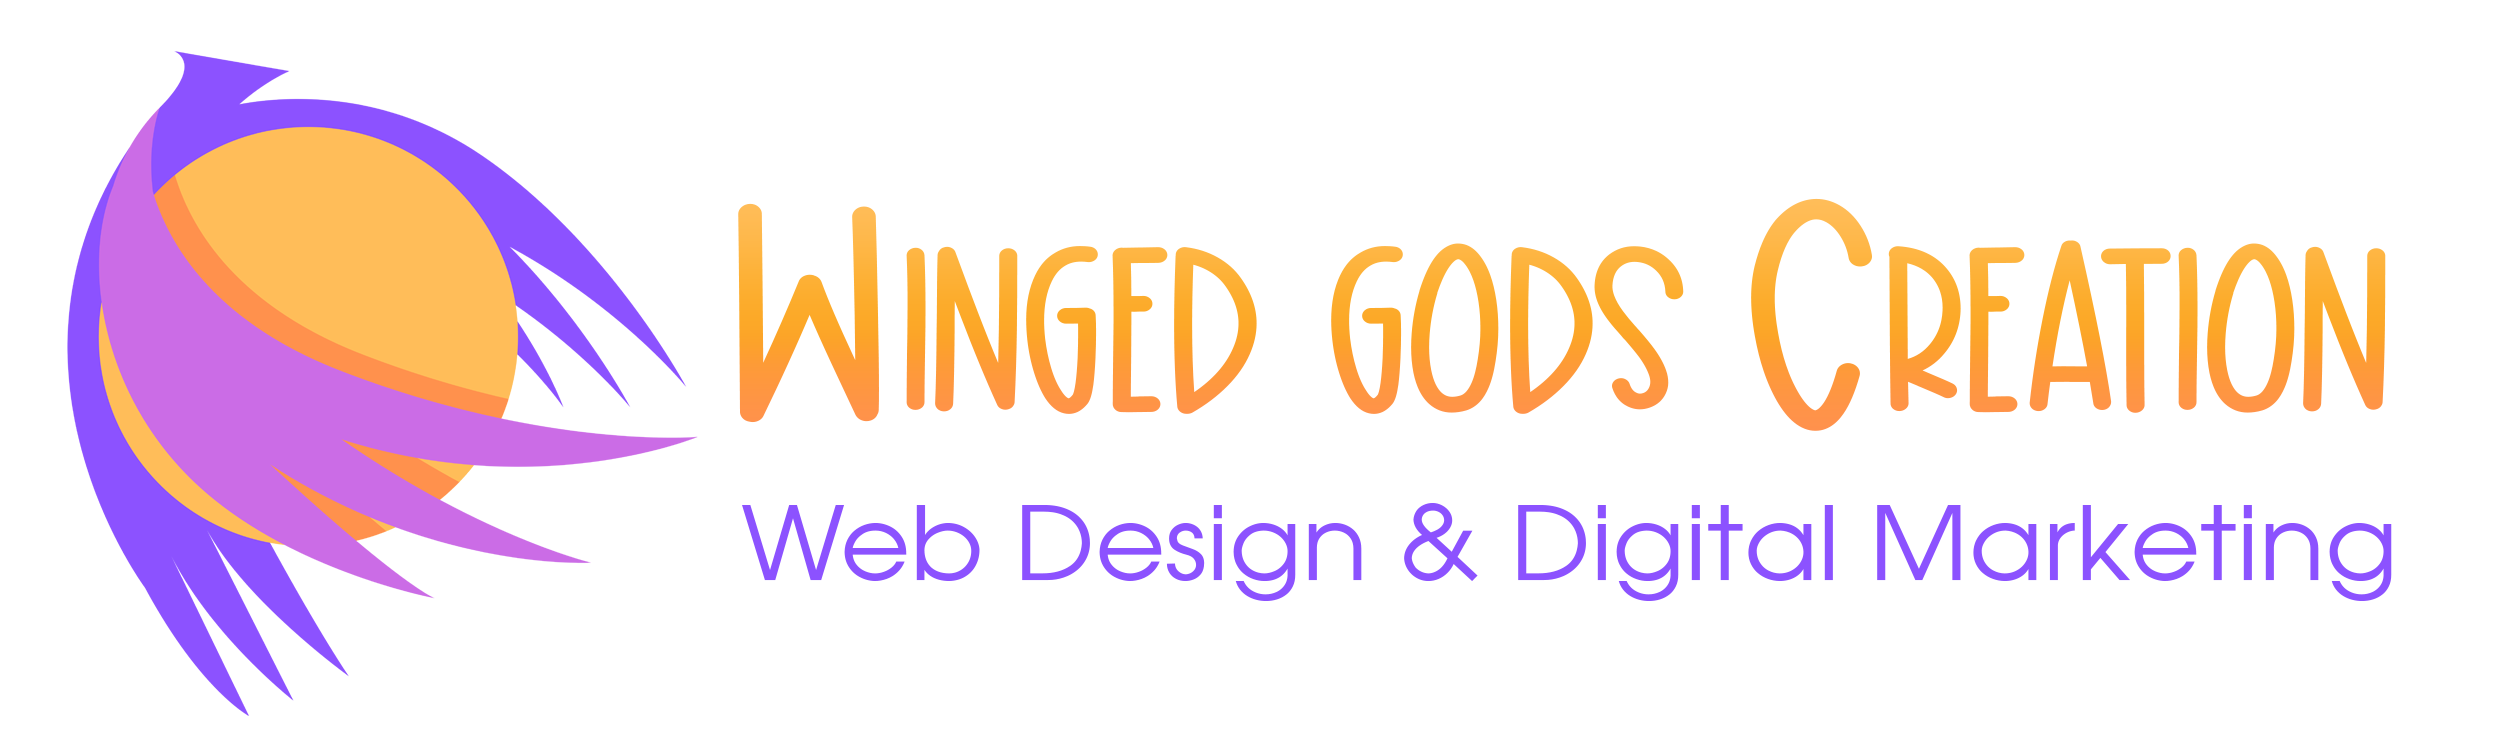 Winged gods Creation Web Design and Digital Marketing